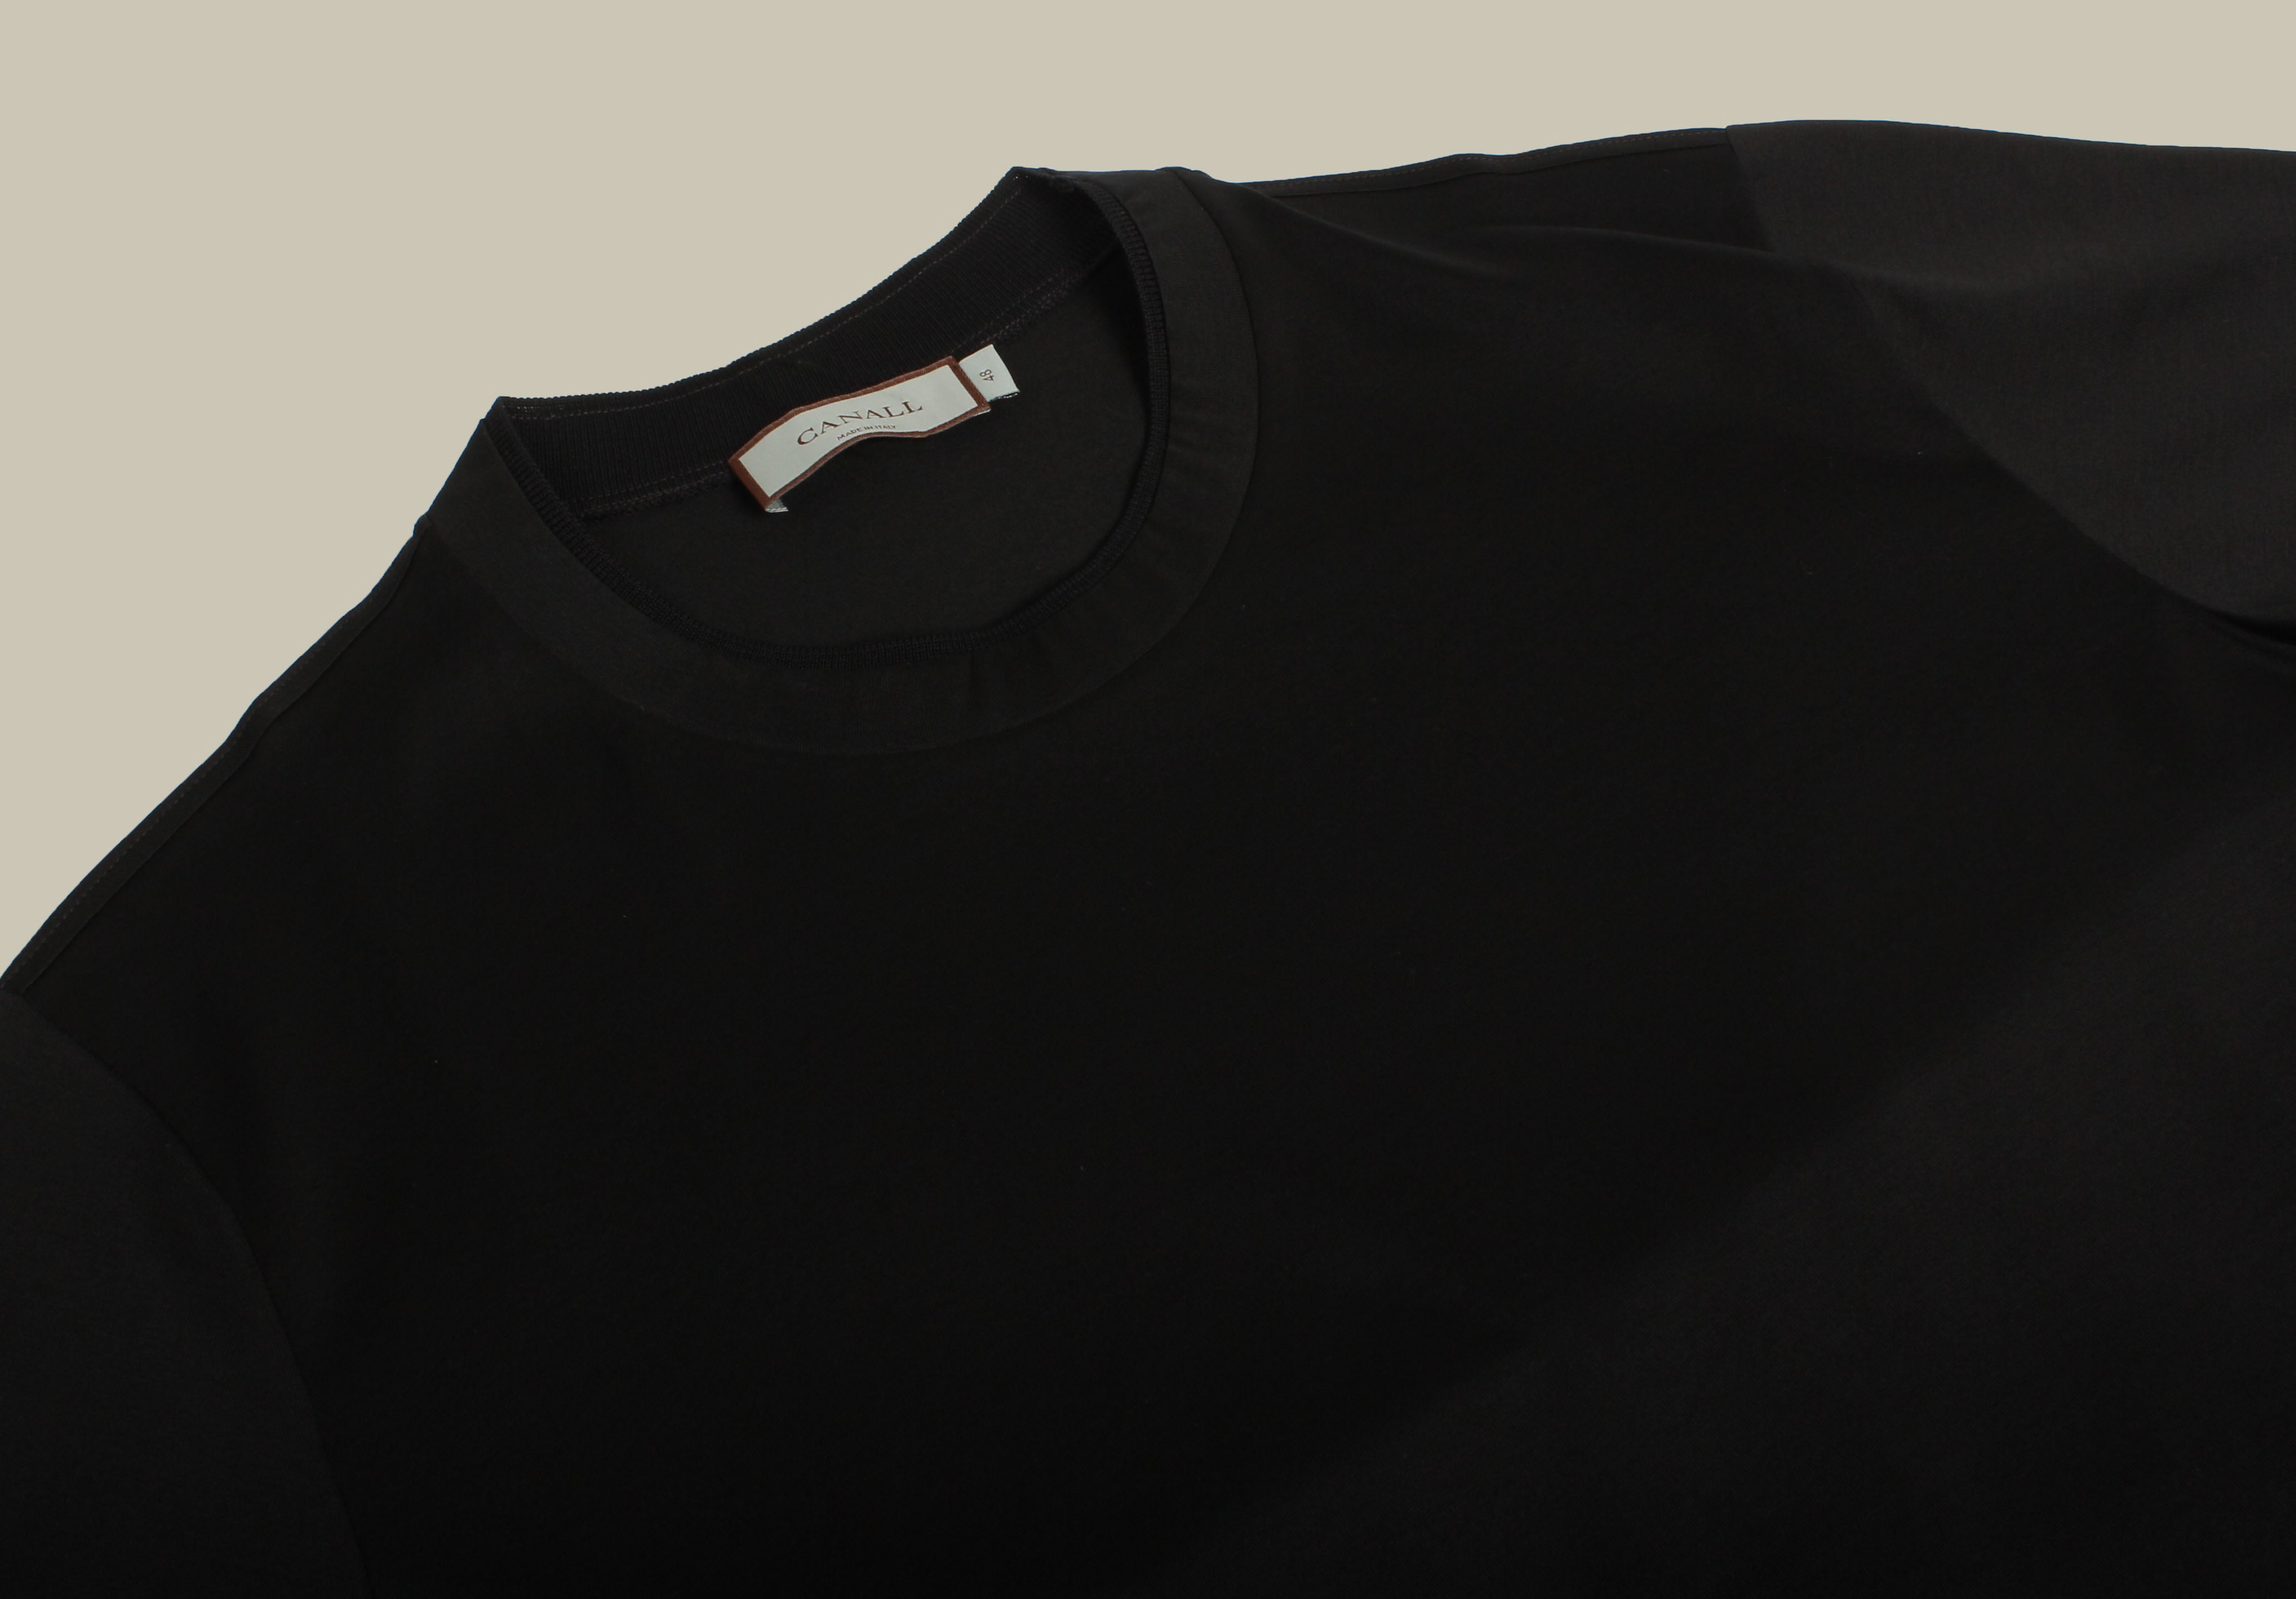 Mercerised Cotton Tonal Tipping T Shirt Black